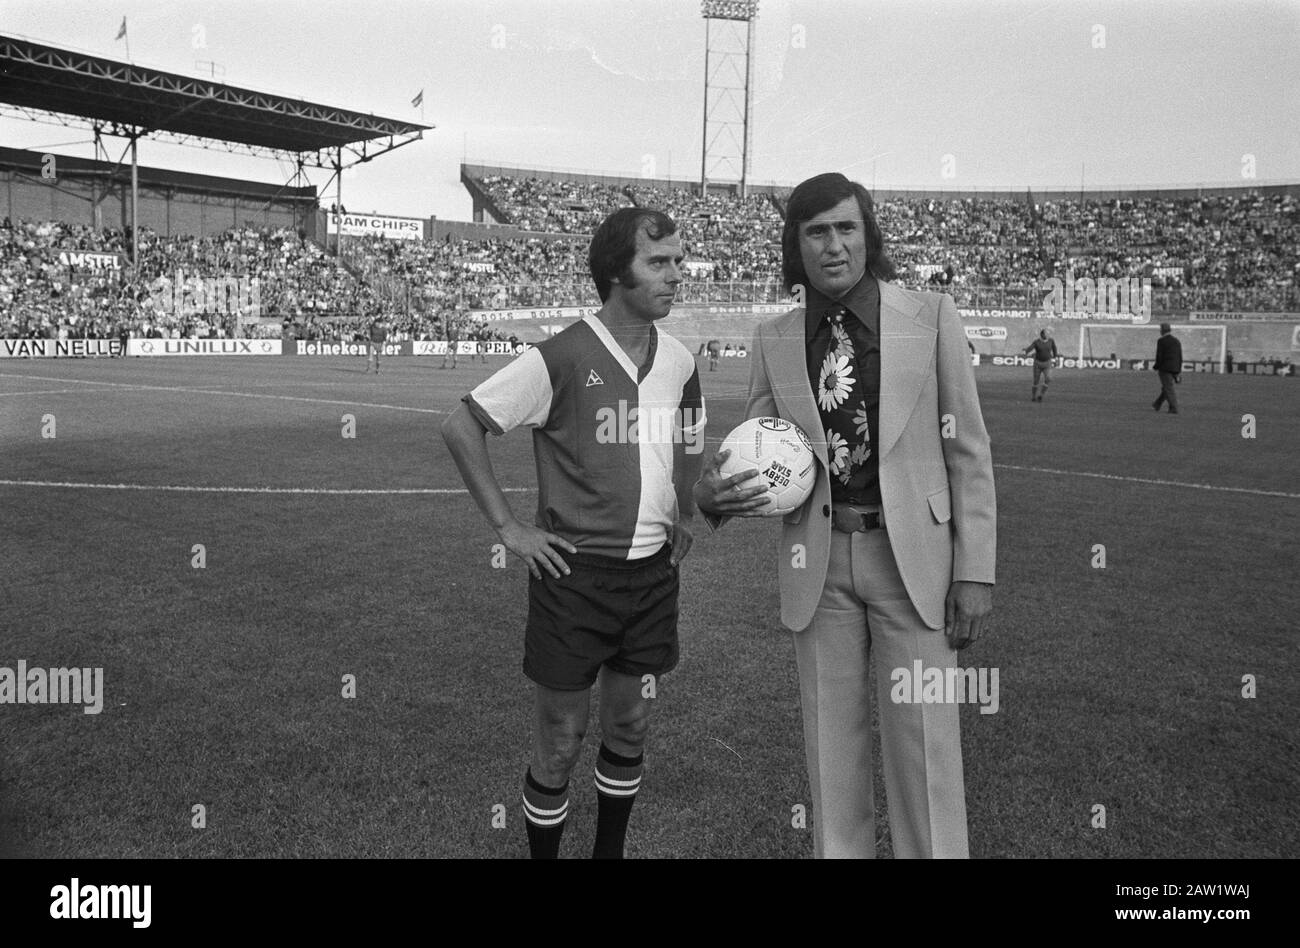 Former Ajax against former Feyenoord, Sjaak Swart (right) and Coen Moulijn Date: August 8, 1973 Location: Amsterdam Keywords: sport, football, soccer Person Name: Moulijn, Coen Swart, Sjaak Stock Photo